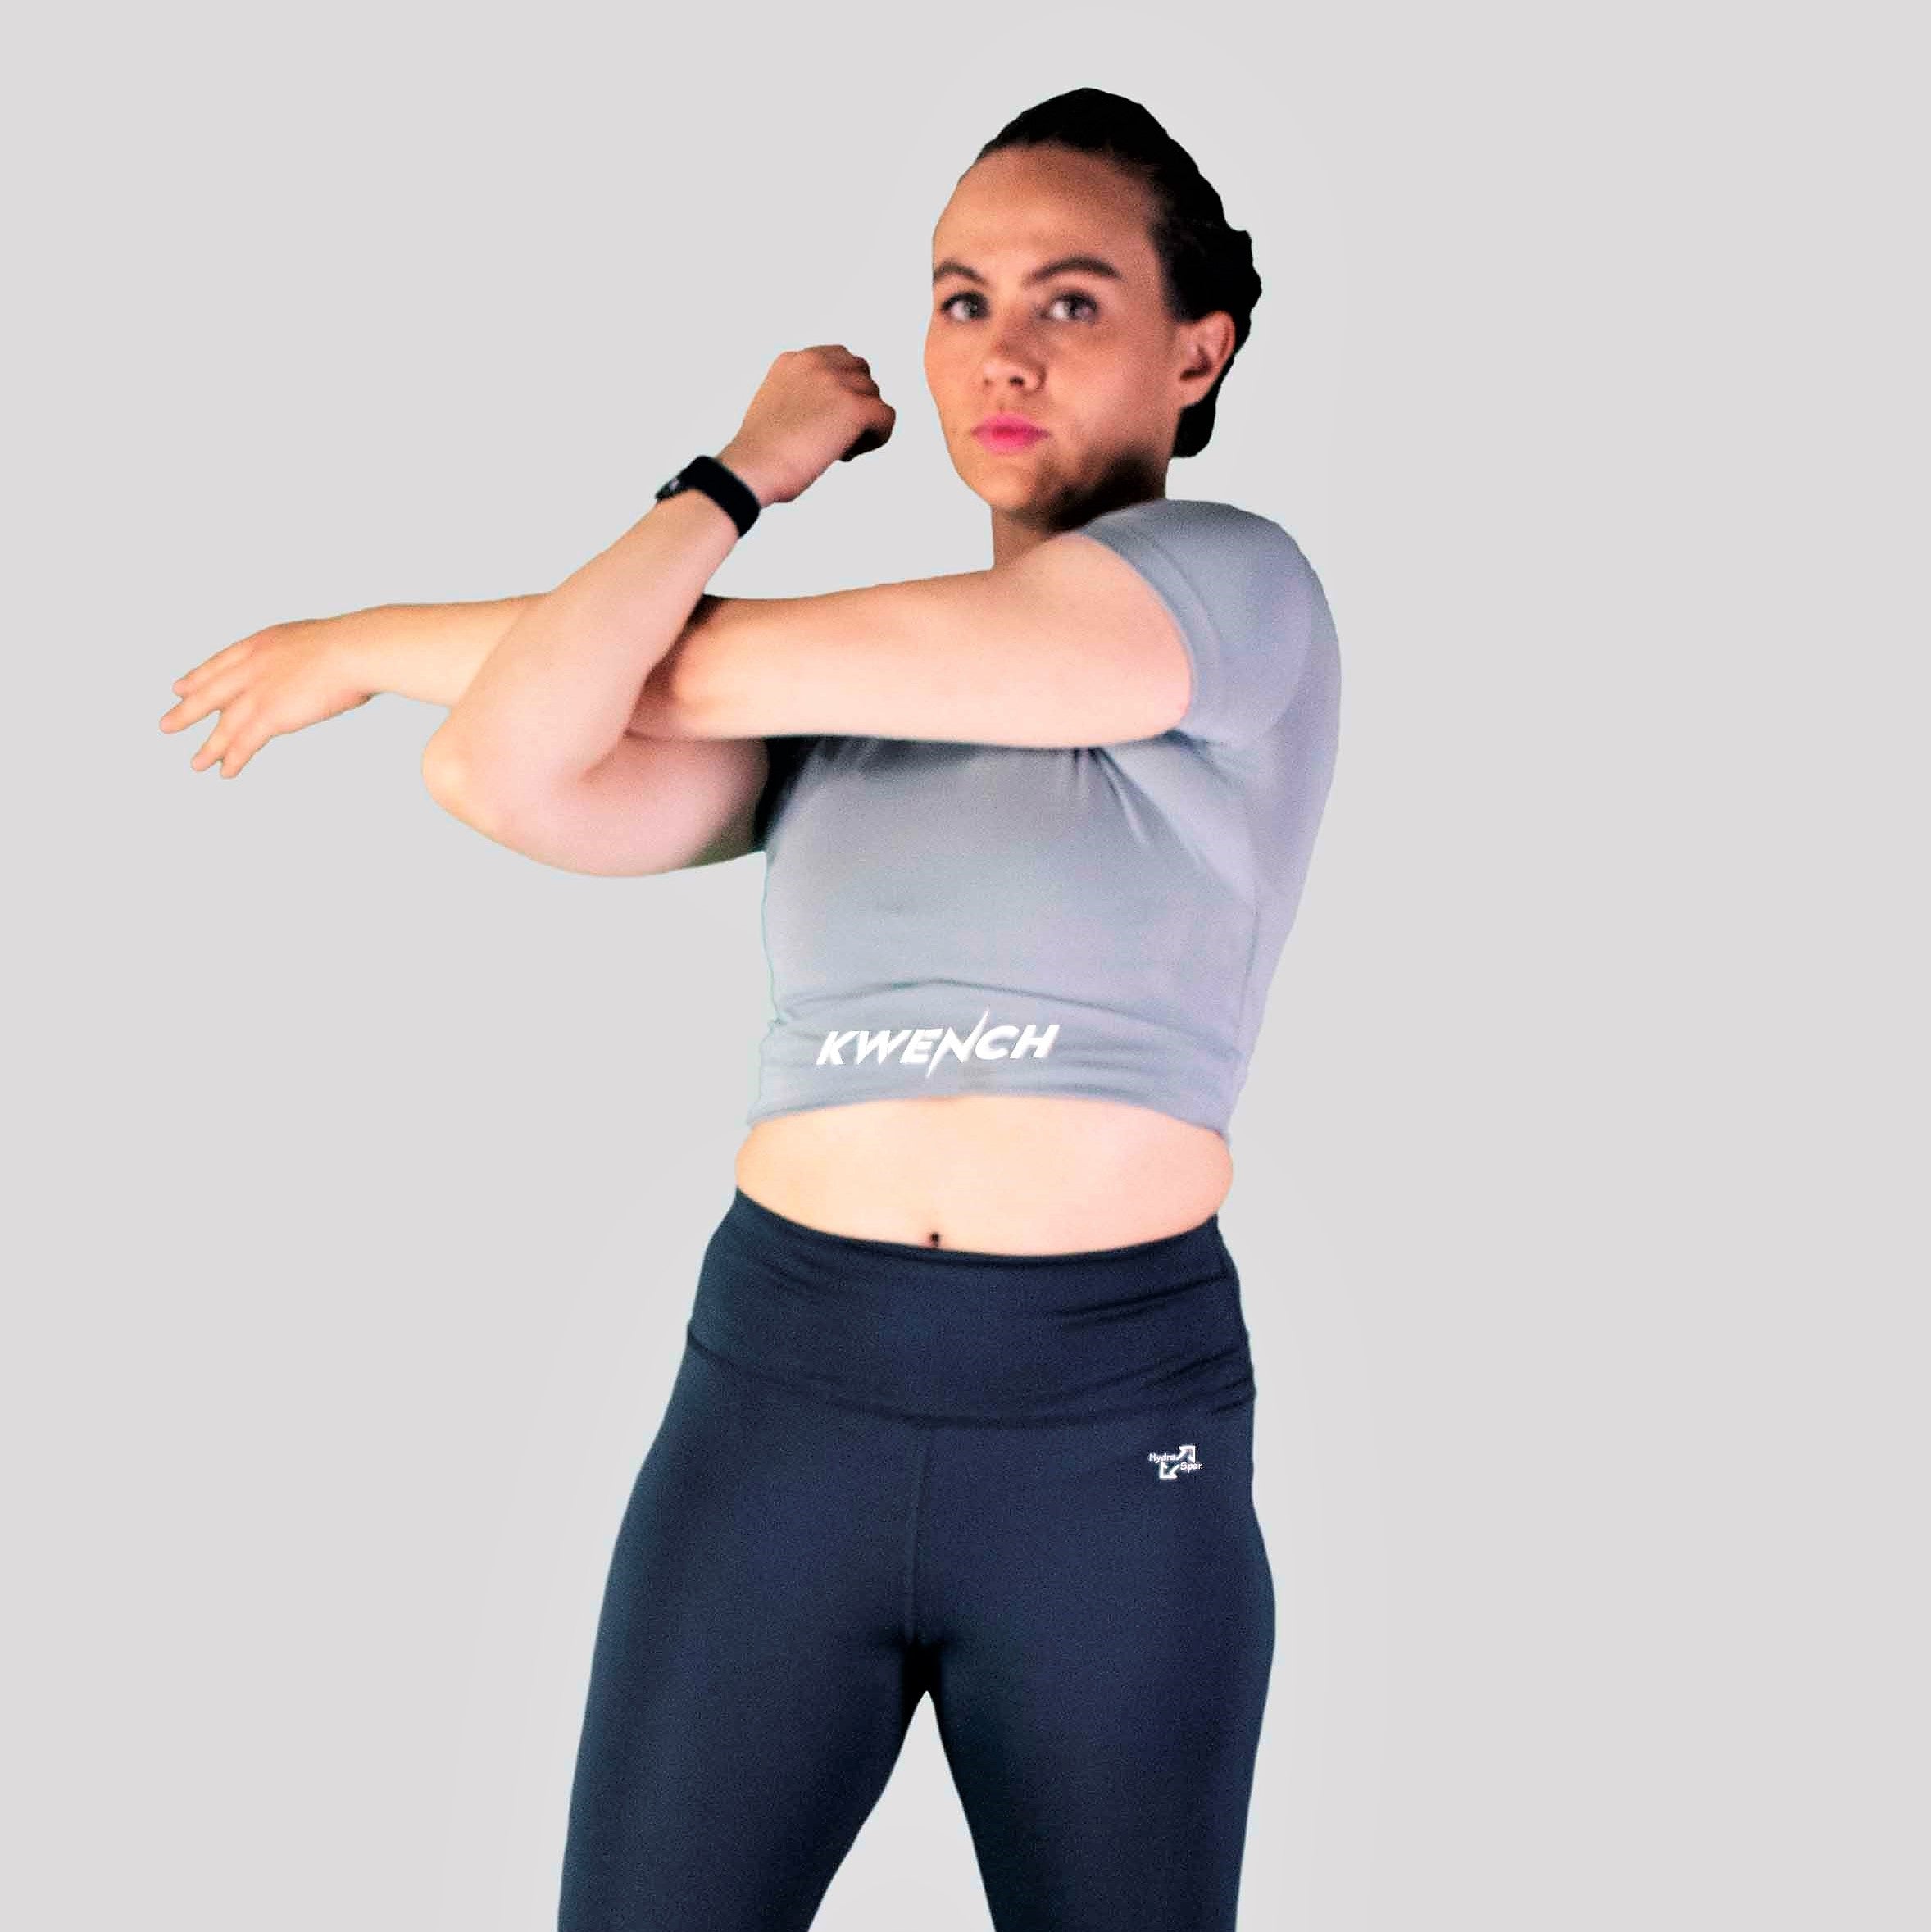 Kwench Womens Gymshark Yoga top tank tshirt crop